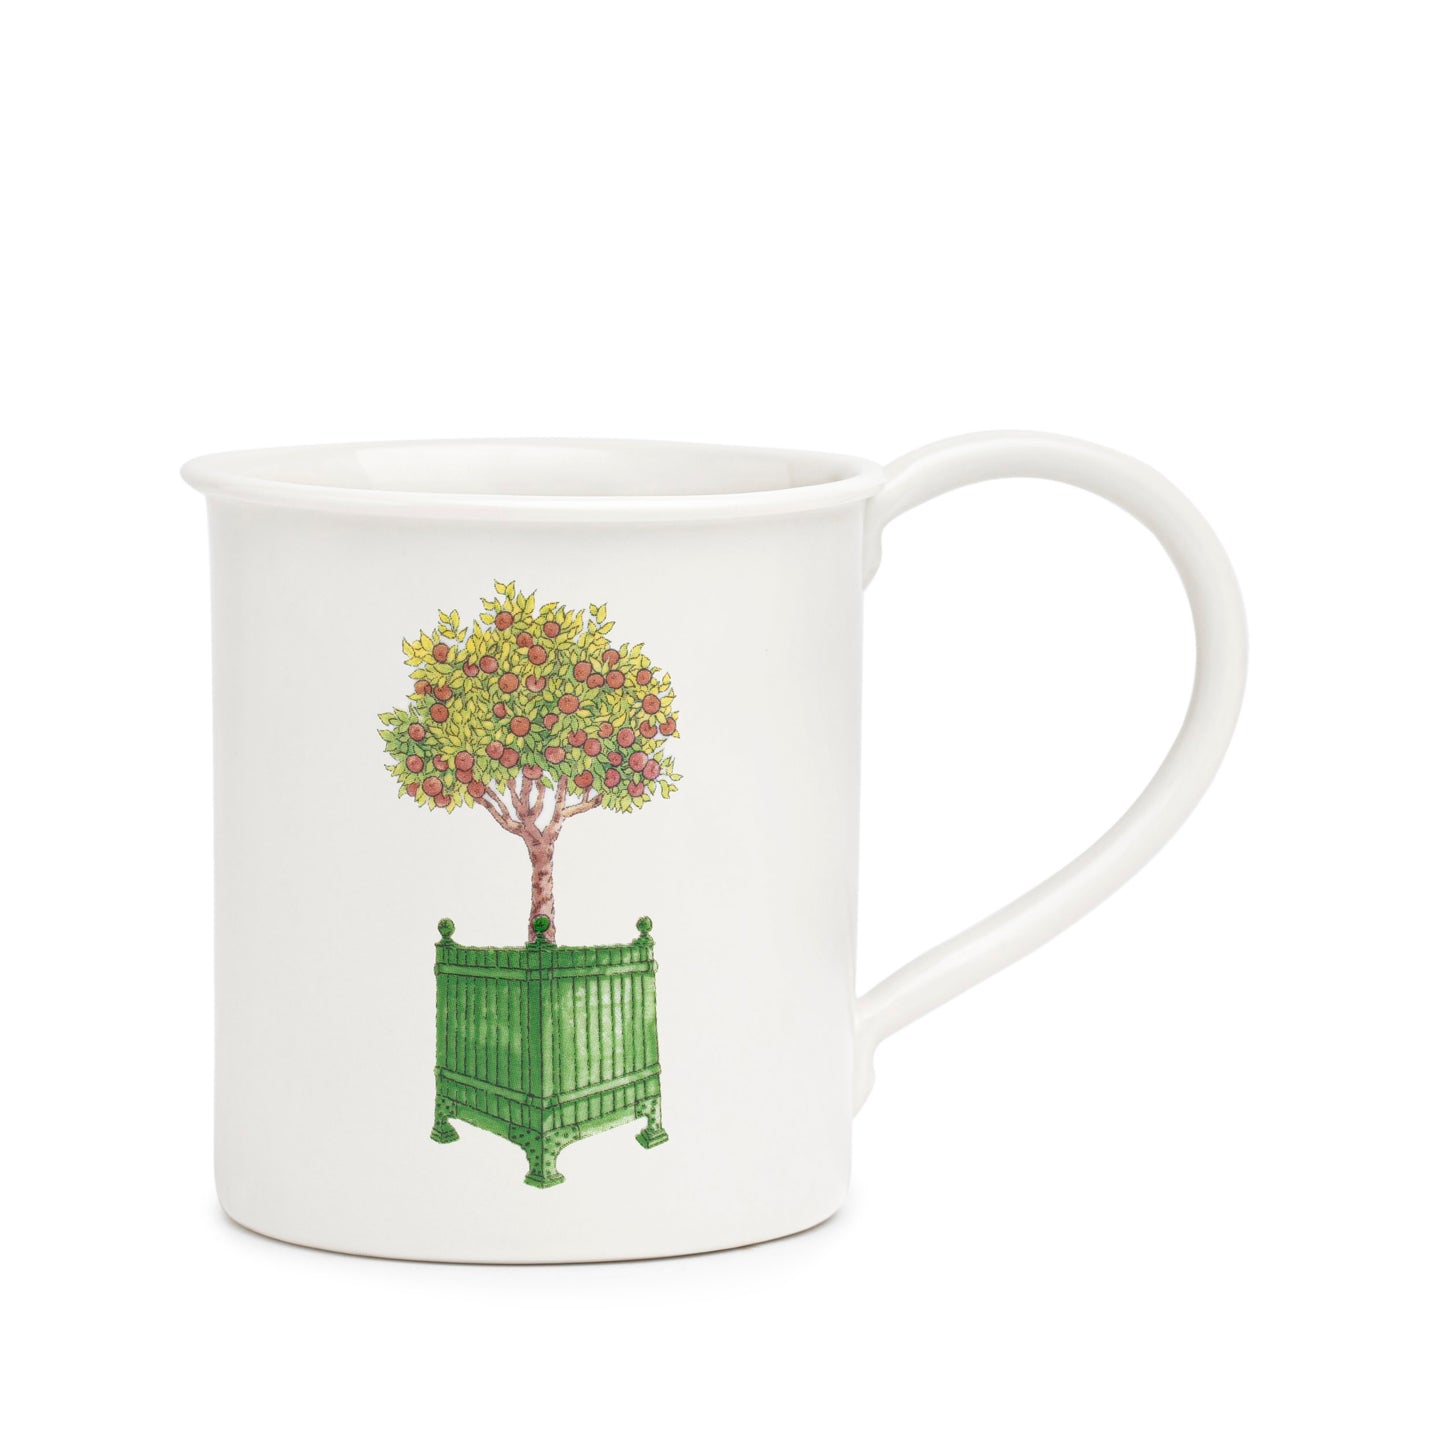 Mug | ORANGE TREE FROM THE GARDEN OF LUXEMBOURG